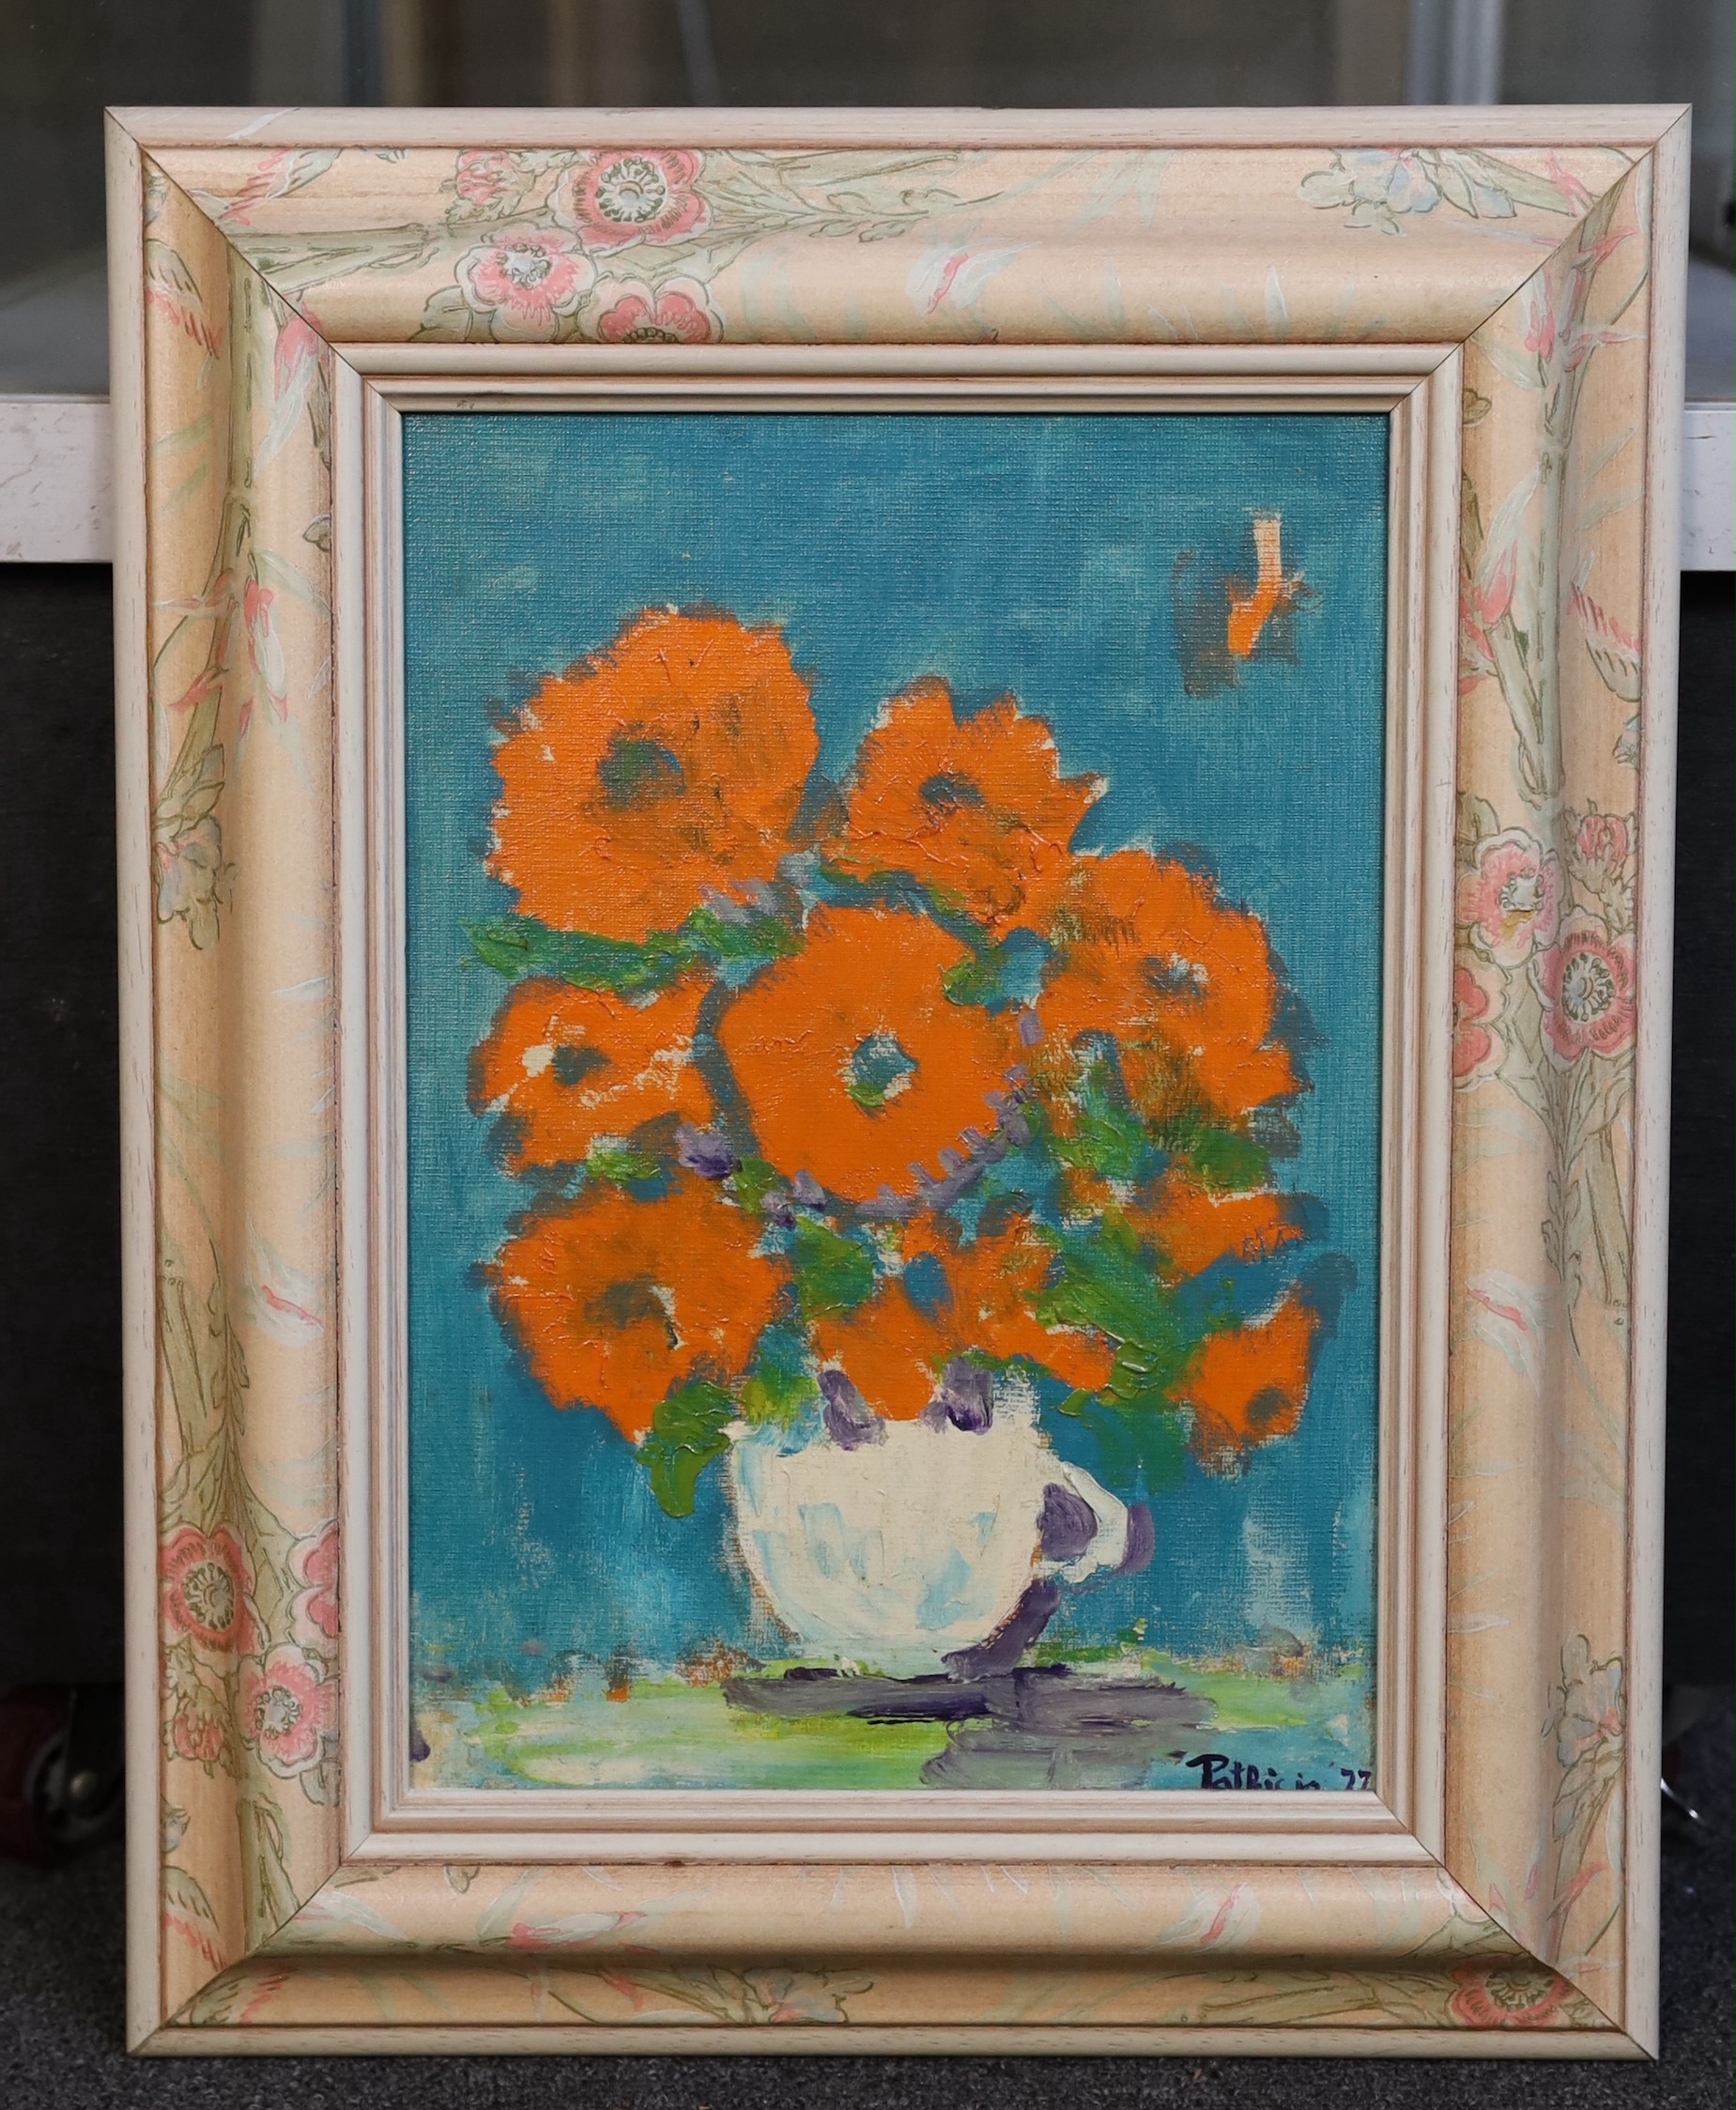 James Lawrence Isherwood (British, 1917- 1989), 'Marigolds', oil on board, 34 x 24cm